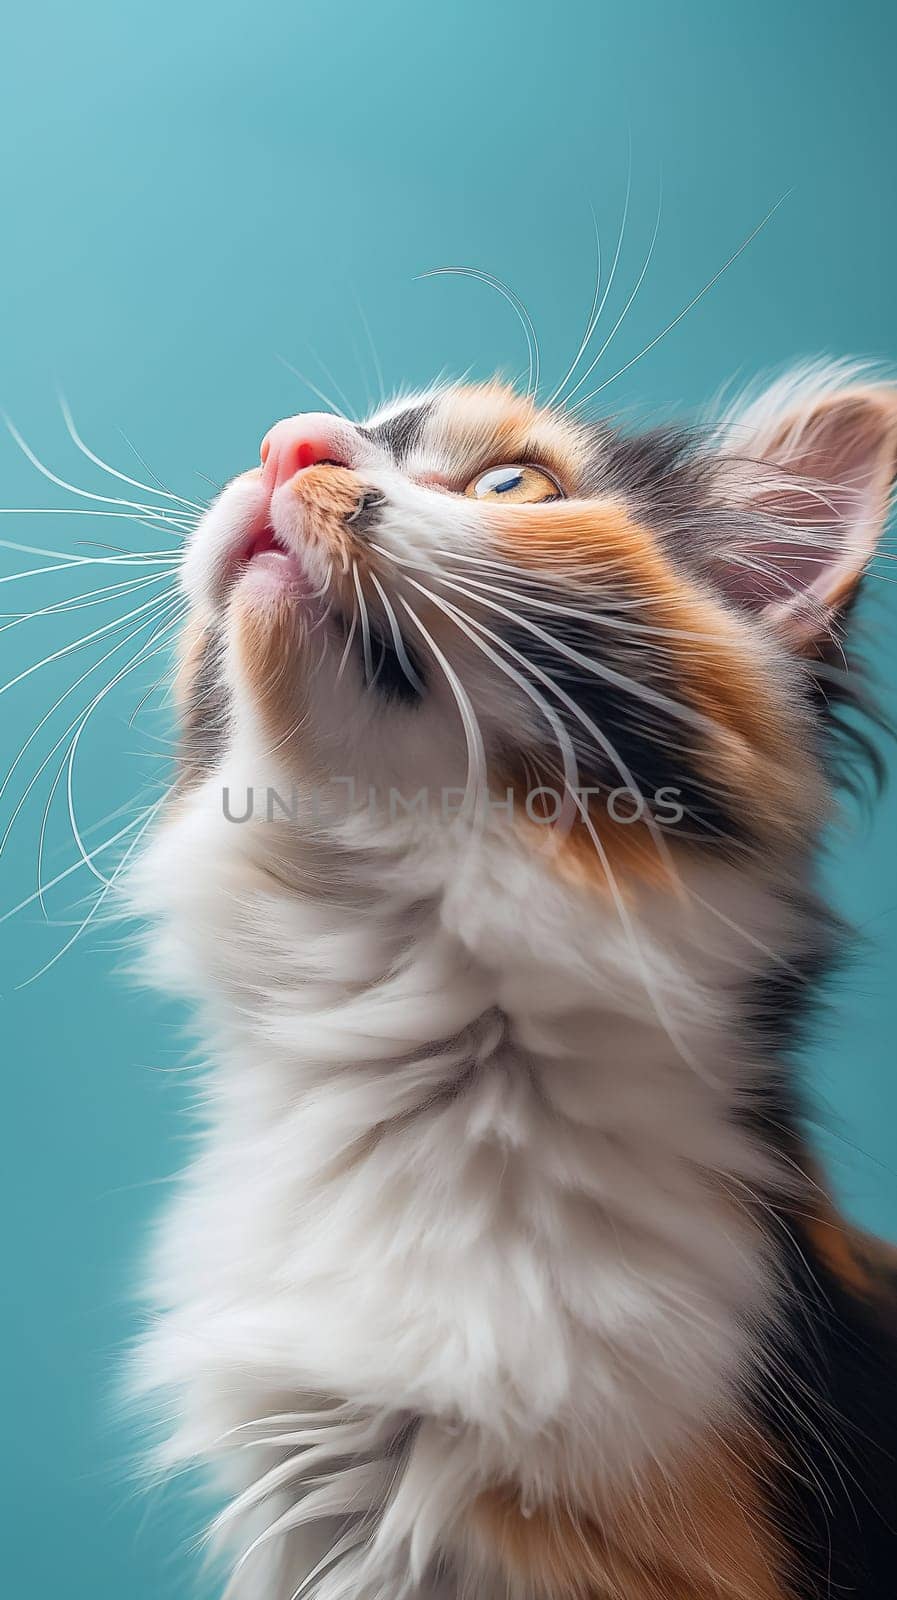 Calico Cat Gazing Upward Against a Blue Background by chrisroll